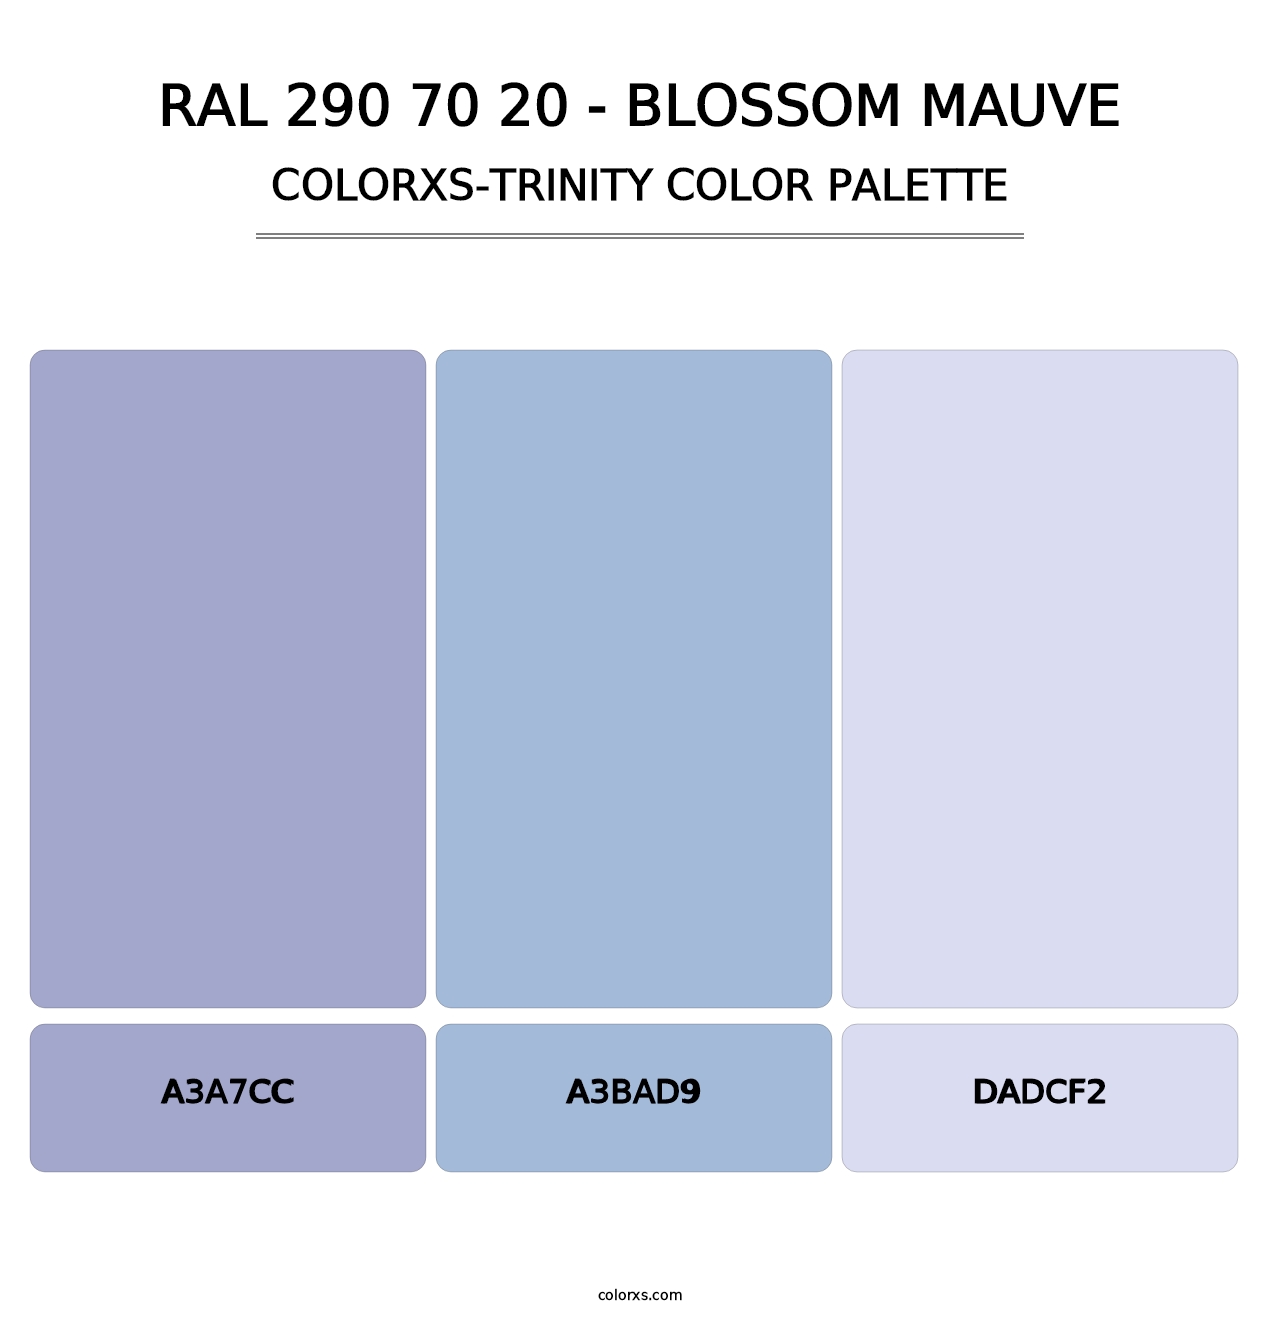 RAL 290 70 20 - Blossom Mauve - Colorxs Trinity Palette